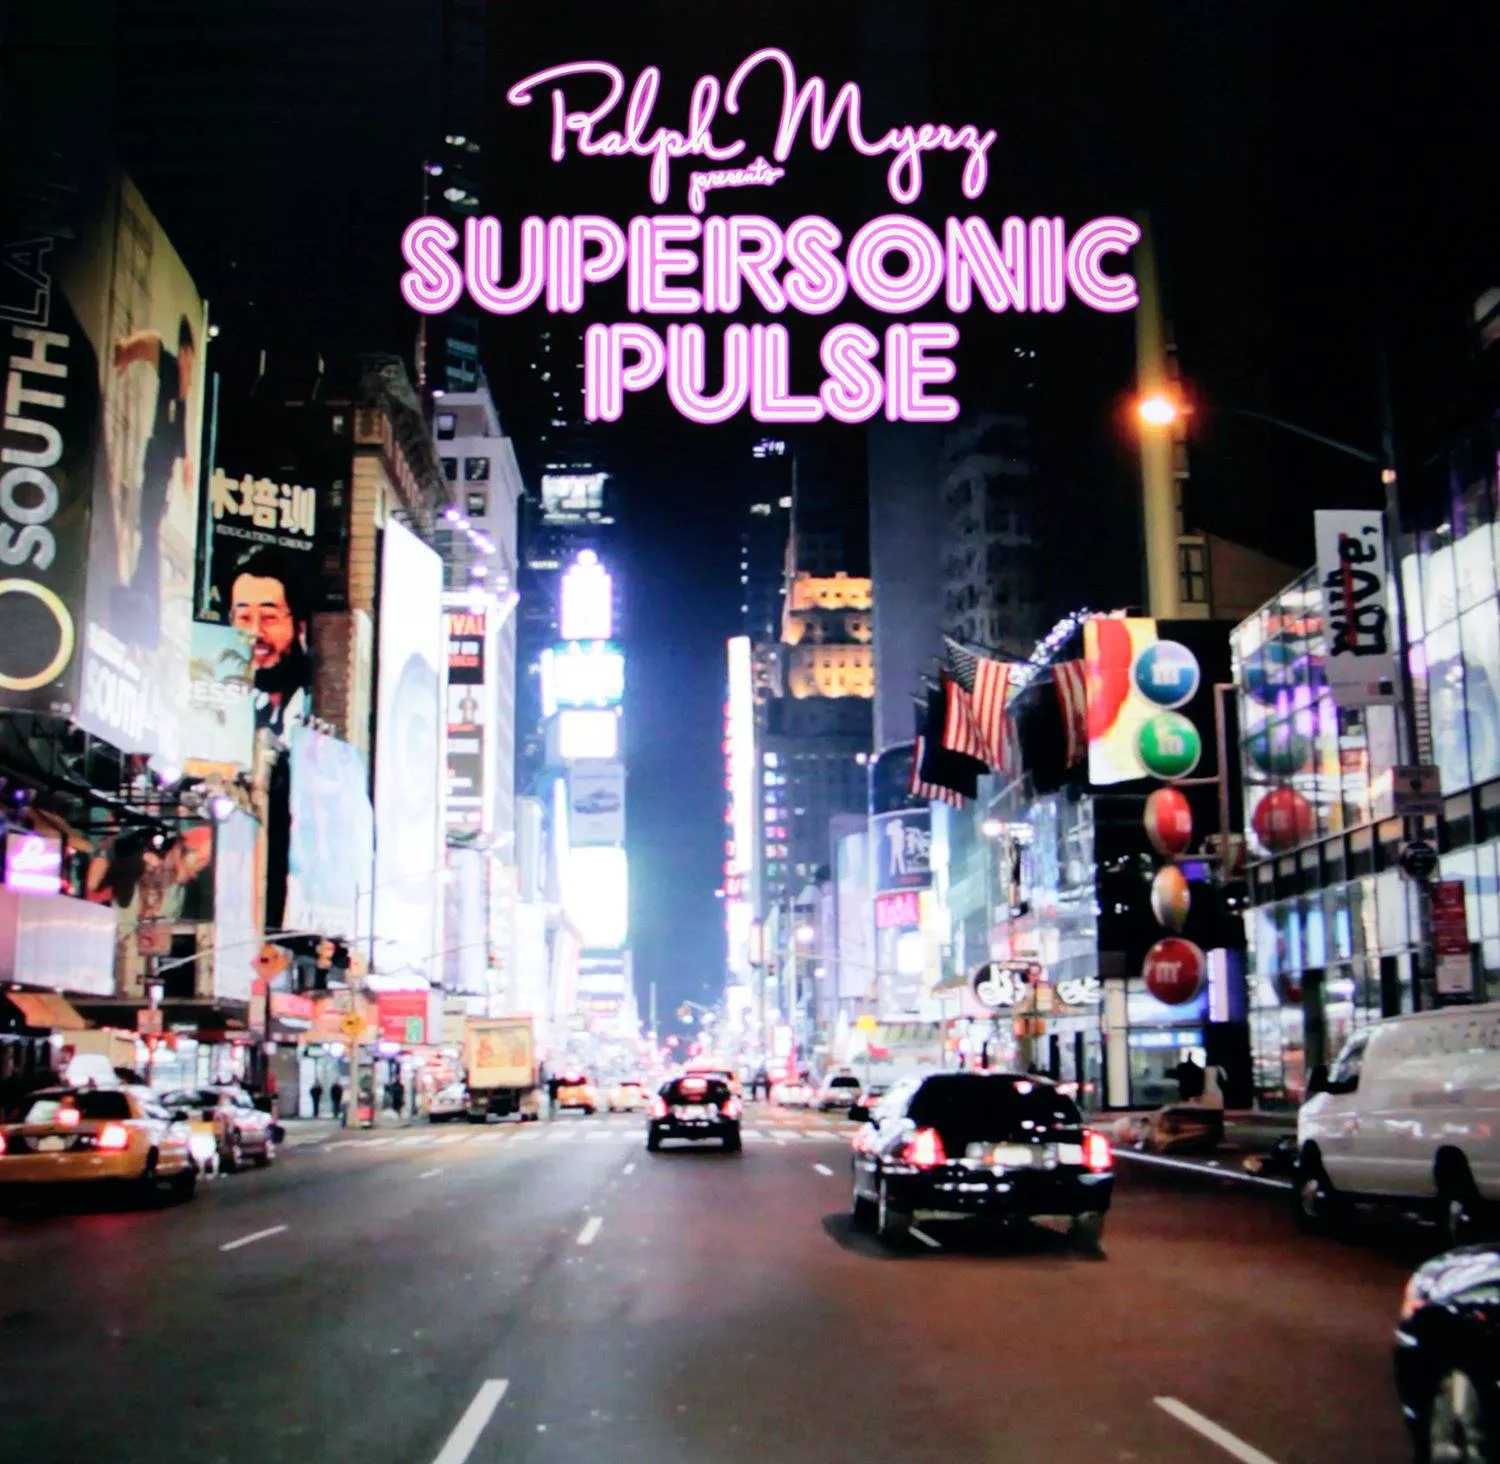 SuperSonic Pulse - Ralph Myerz